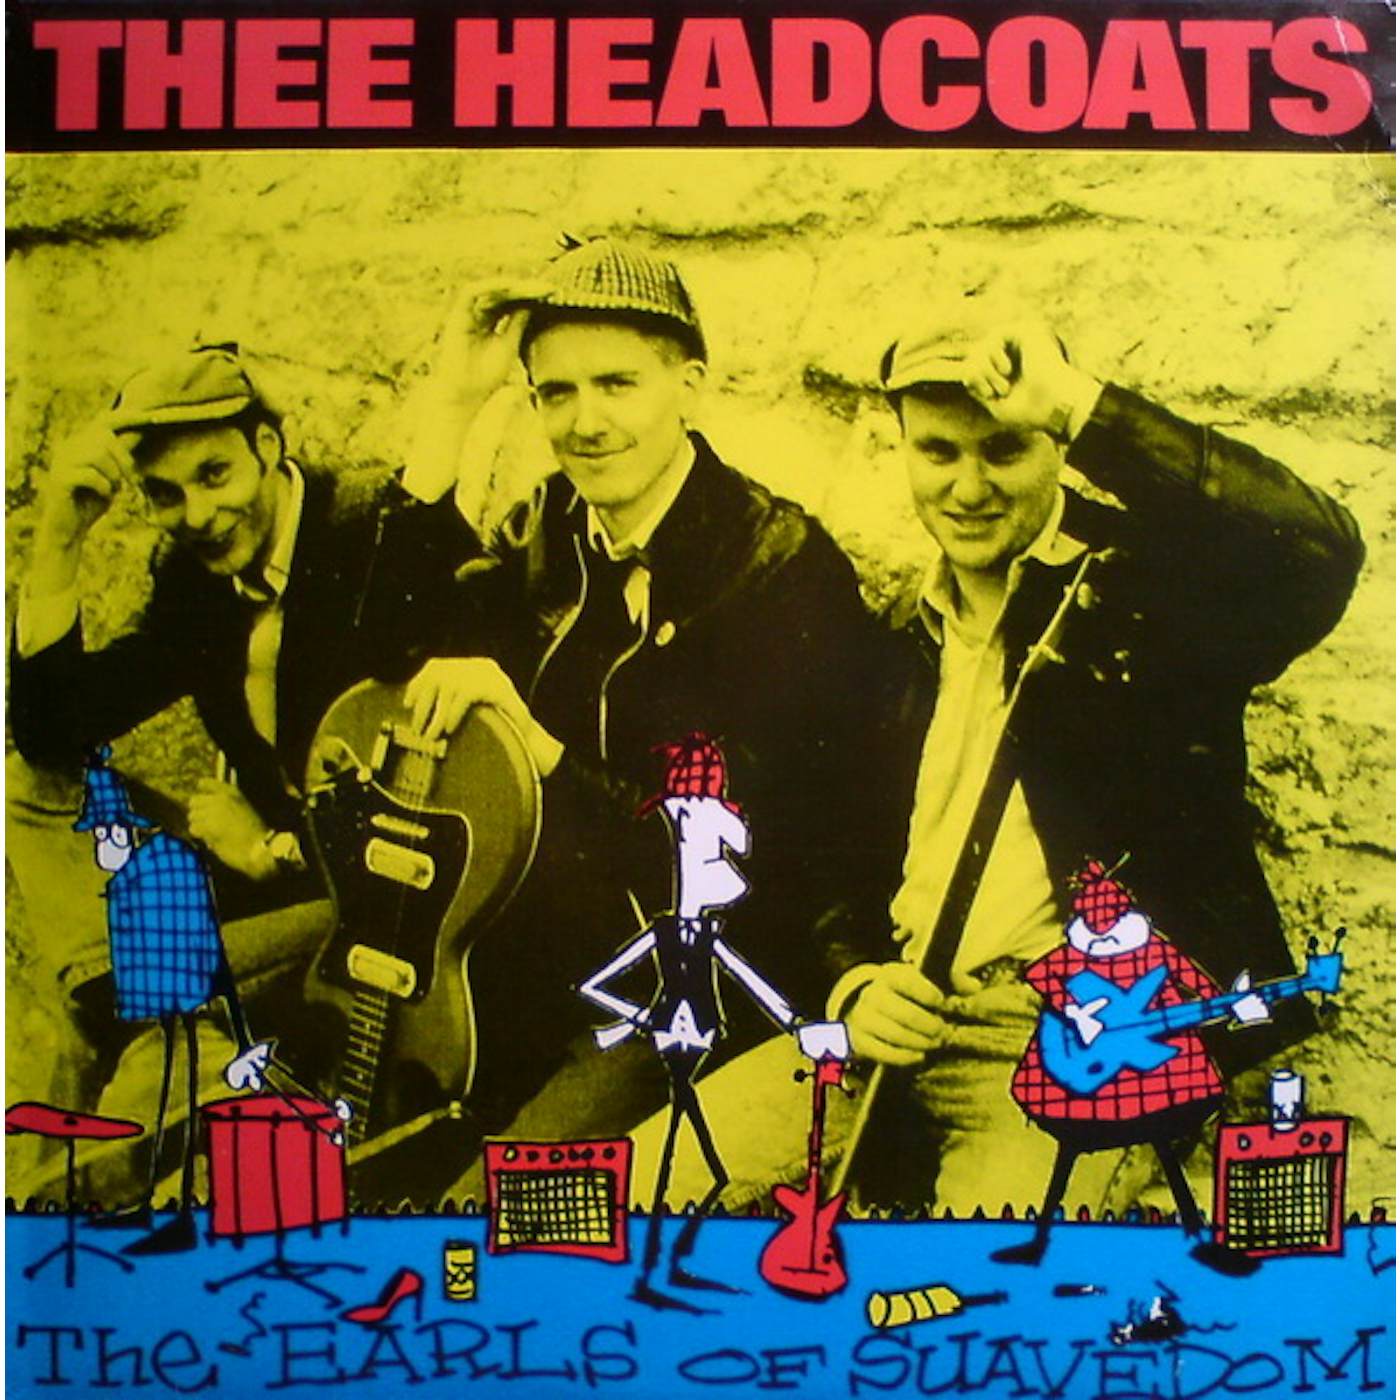 Thee Headcoats EARLS OF SAUVEDOM Vinyl Record